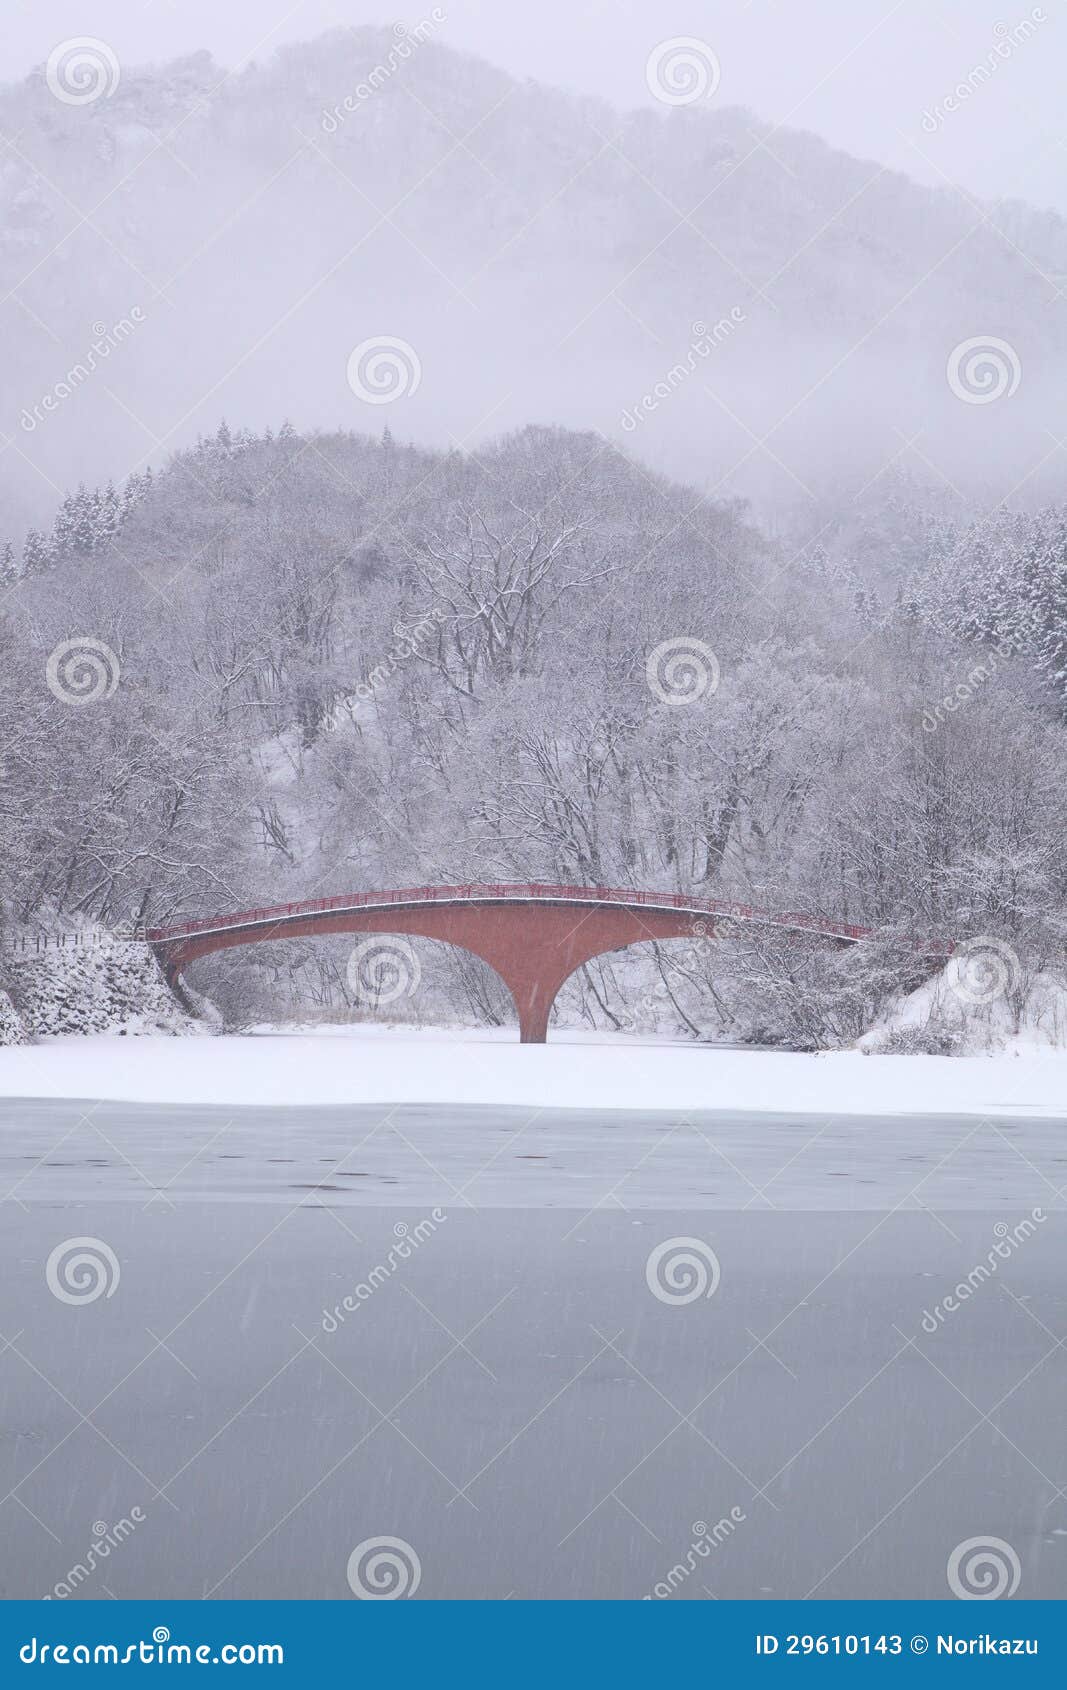 frozen lake and bridge